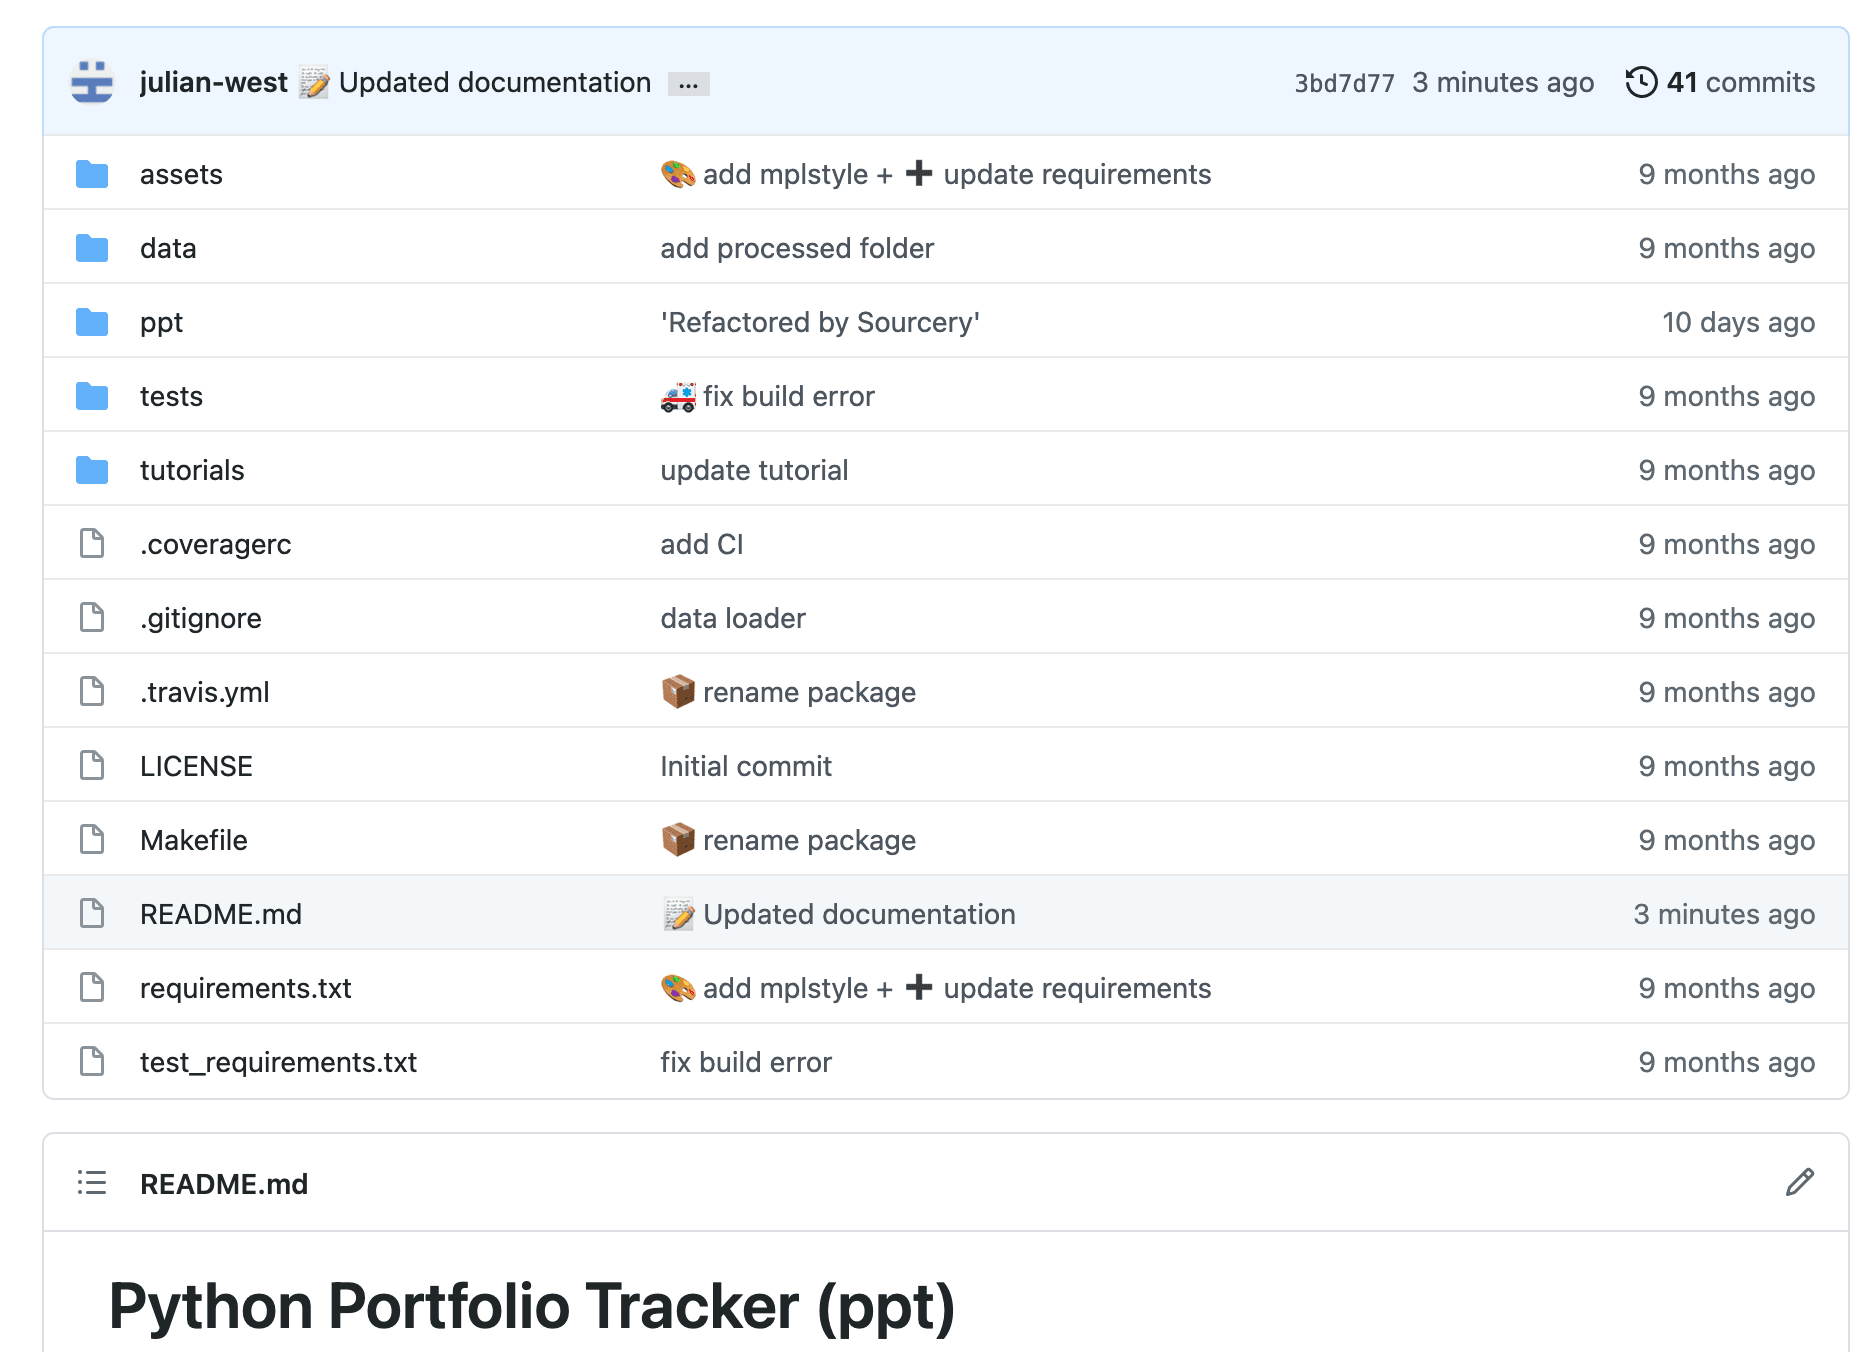 python-portfolio-tracker github repo